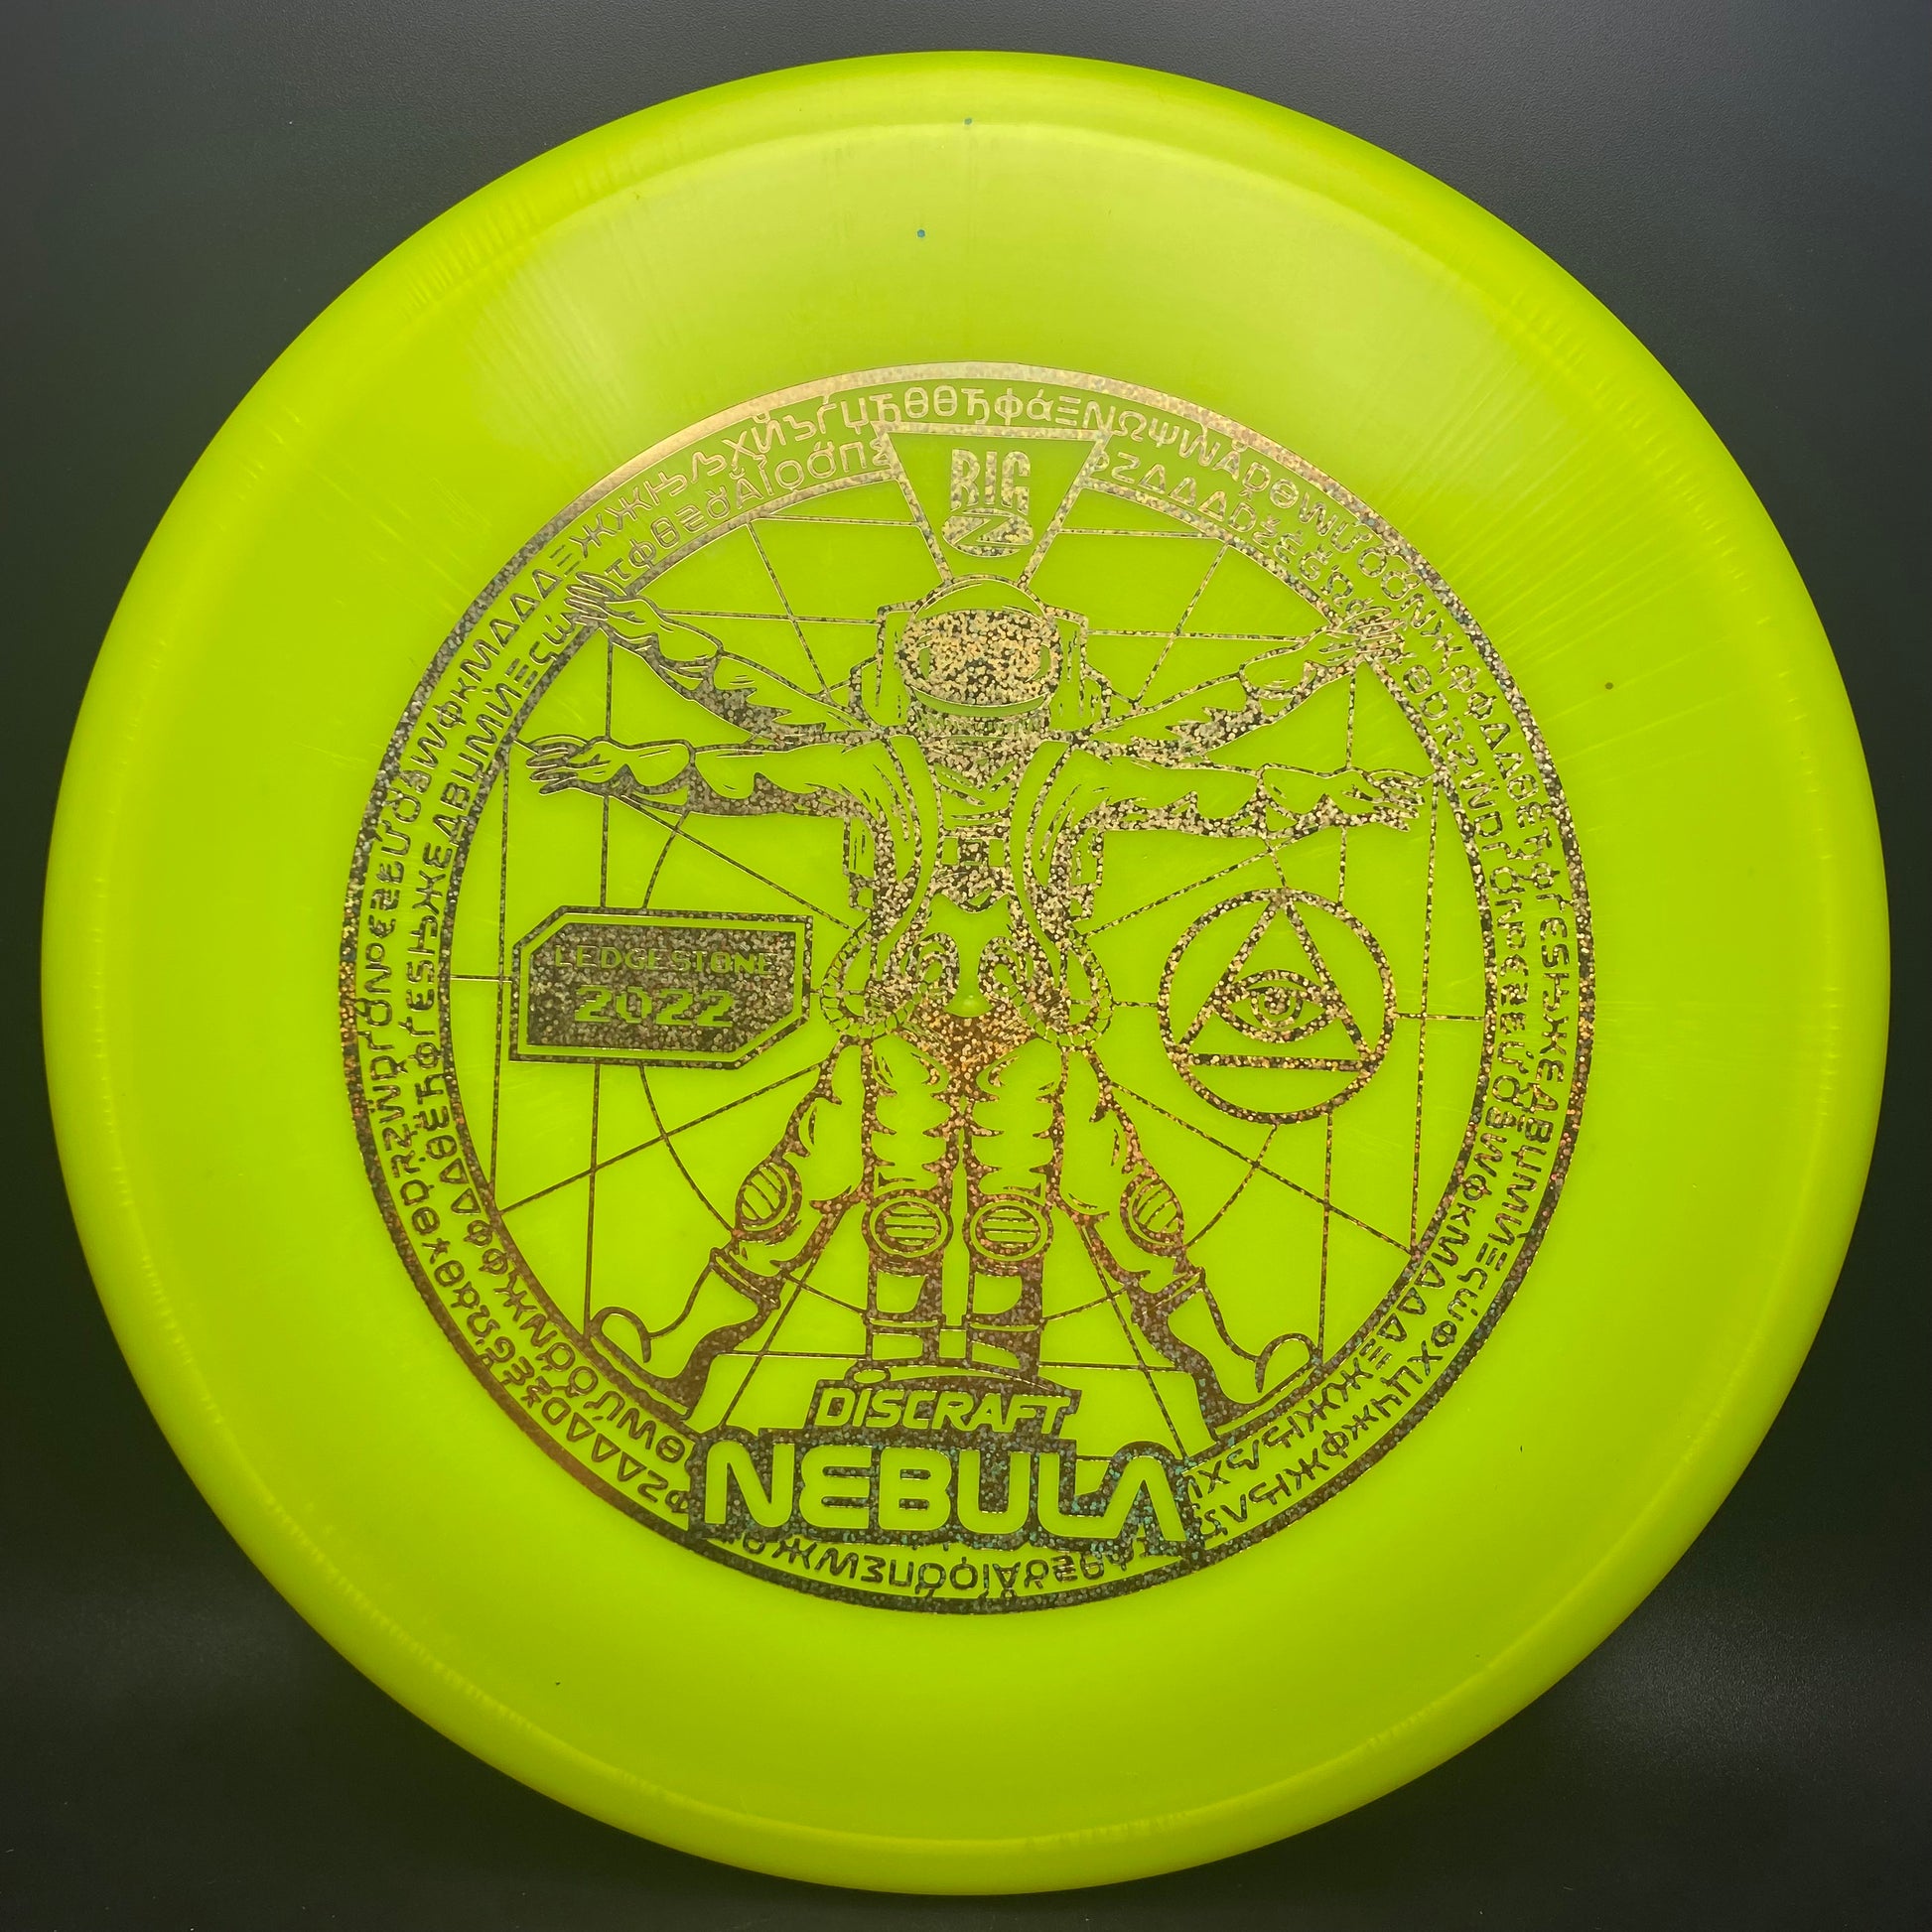 Big Z Nebula - 2022 Ledgestone Limited Edition Discraft